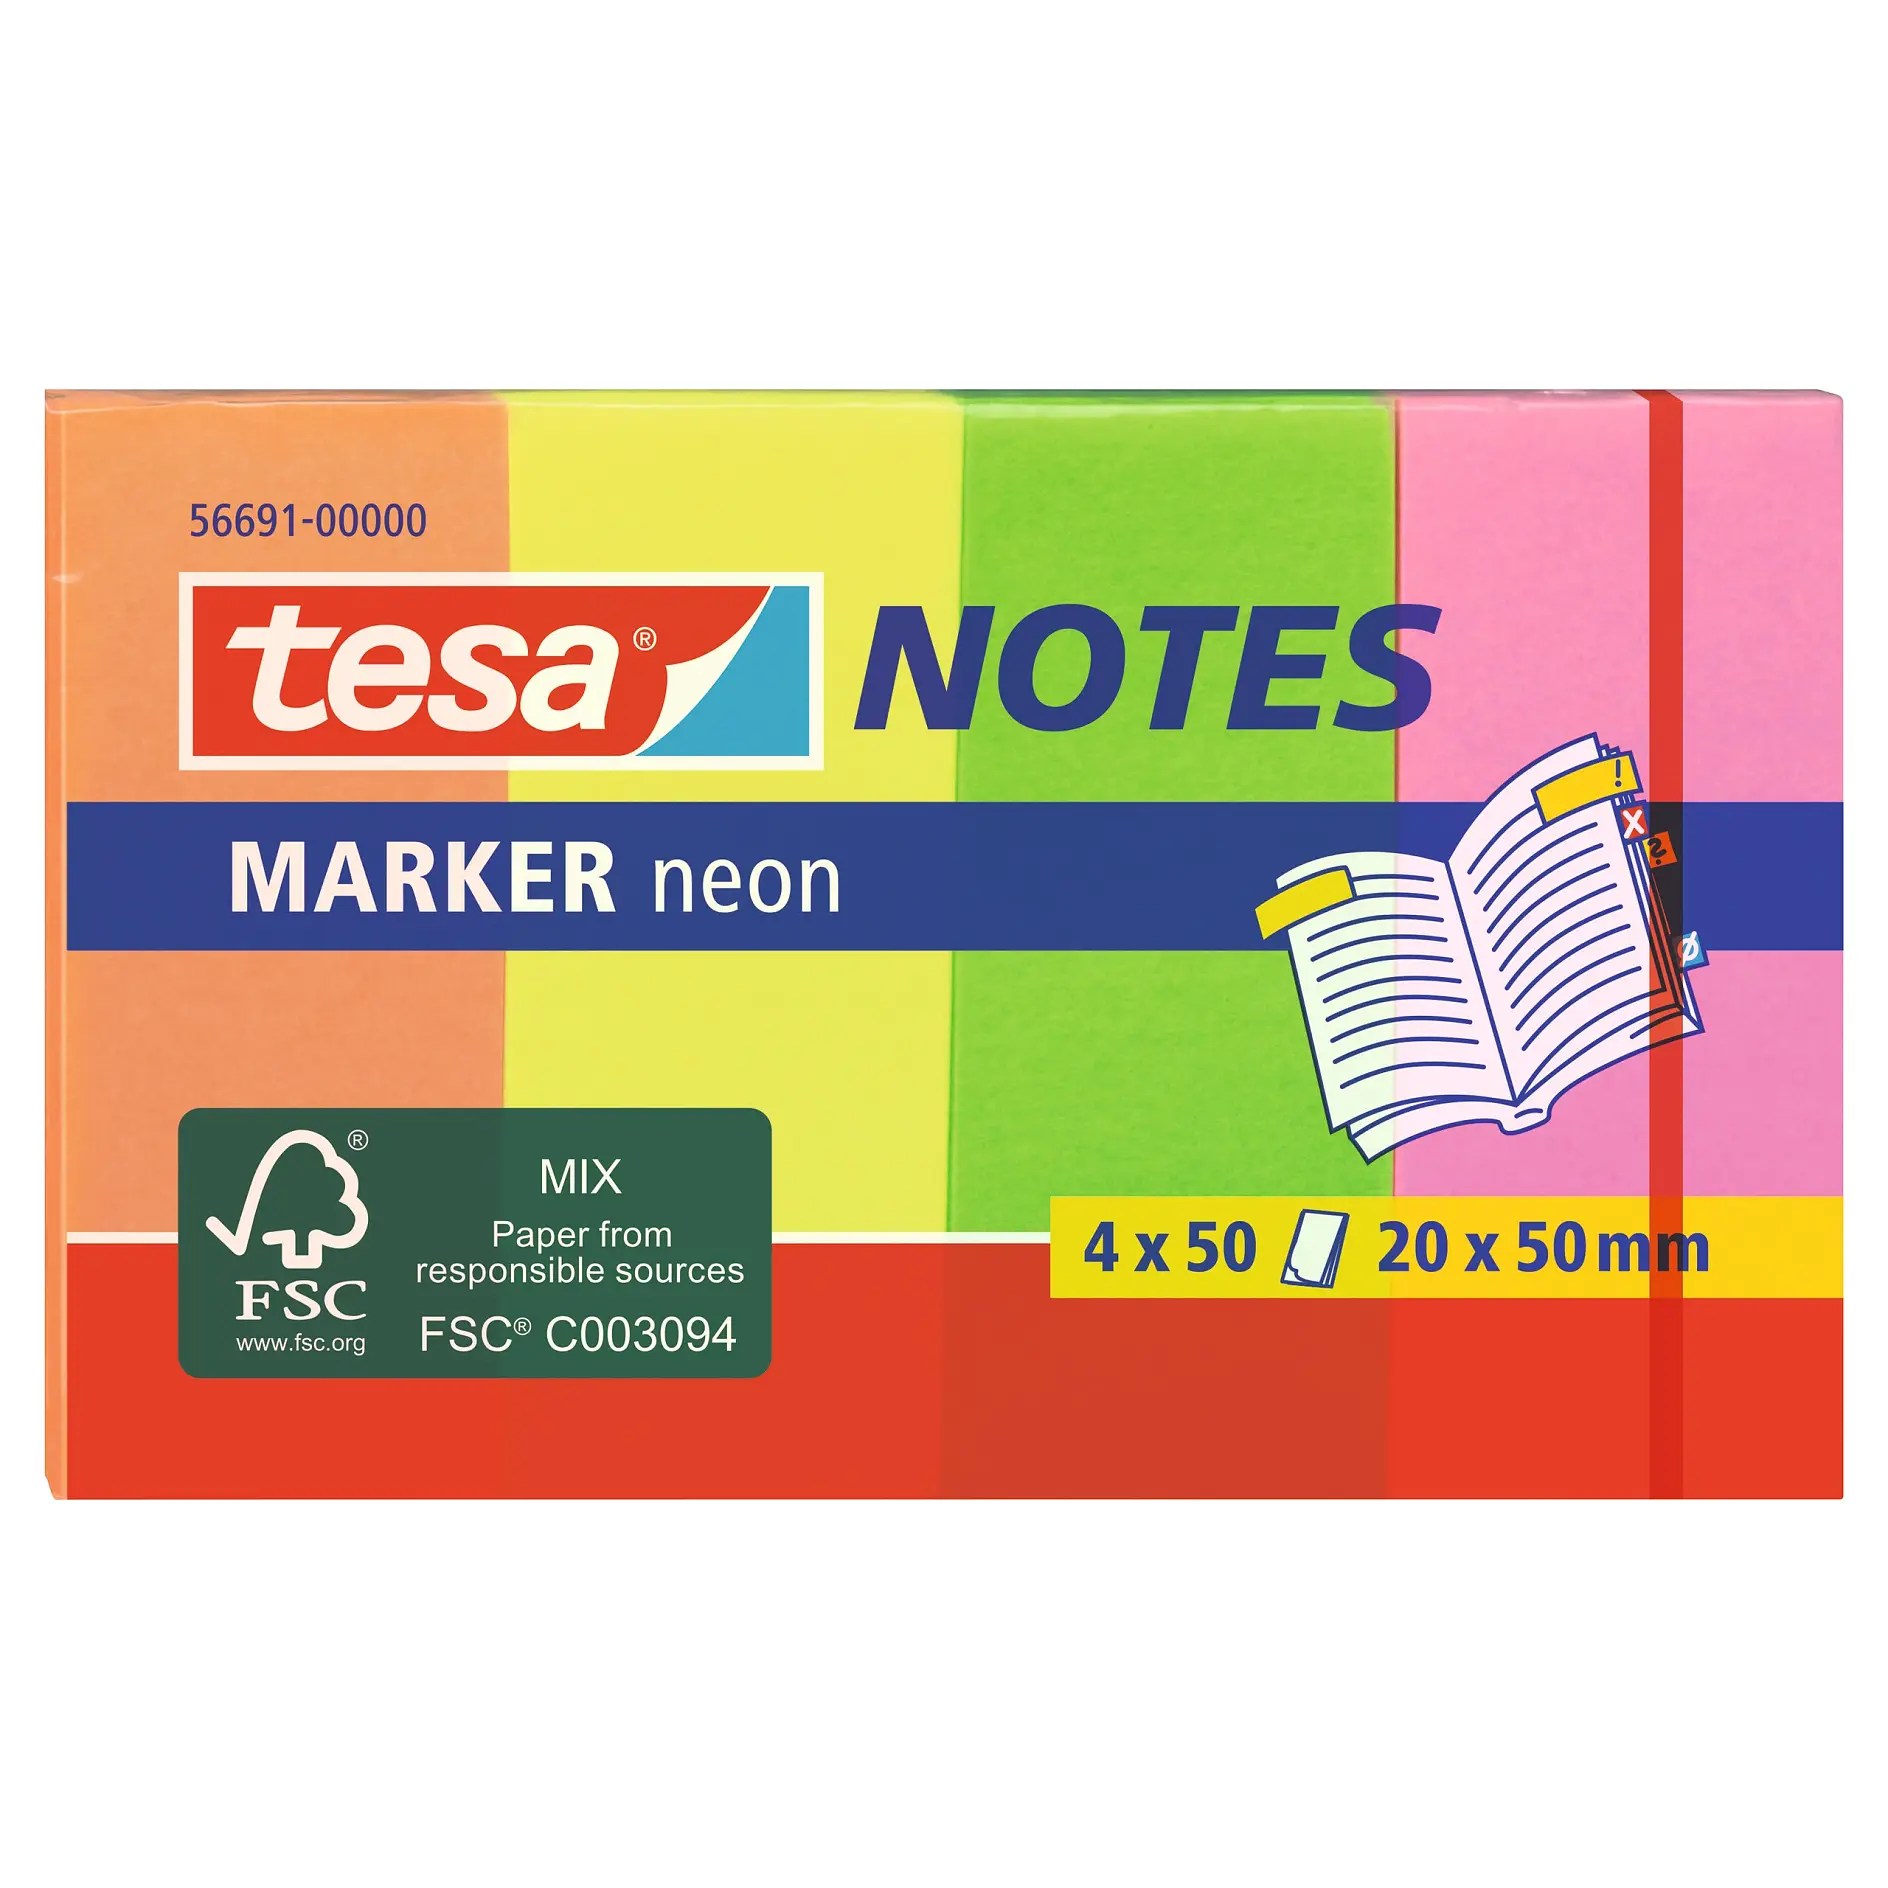 [en-en] tesa notes 3x50:40mm (pink, yellow, green, orange)